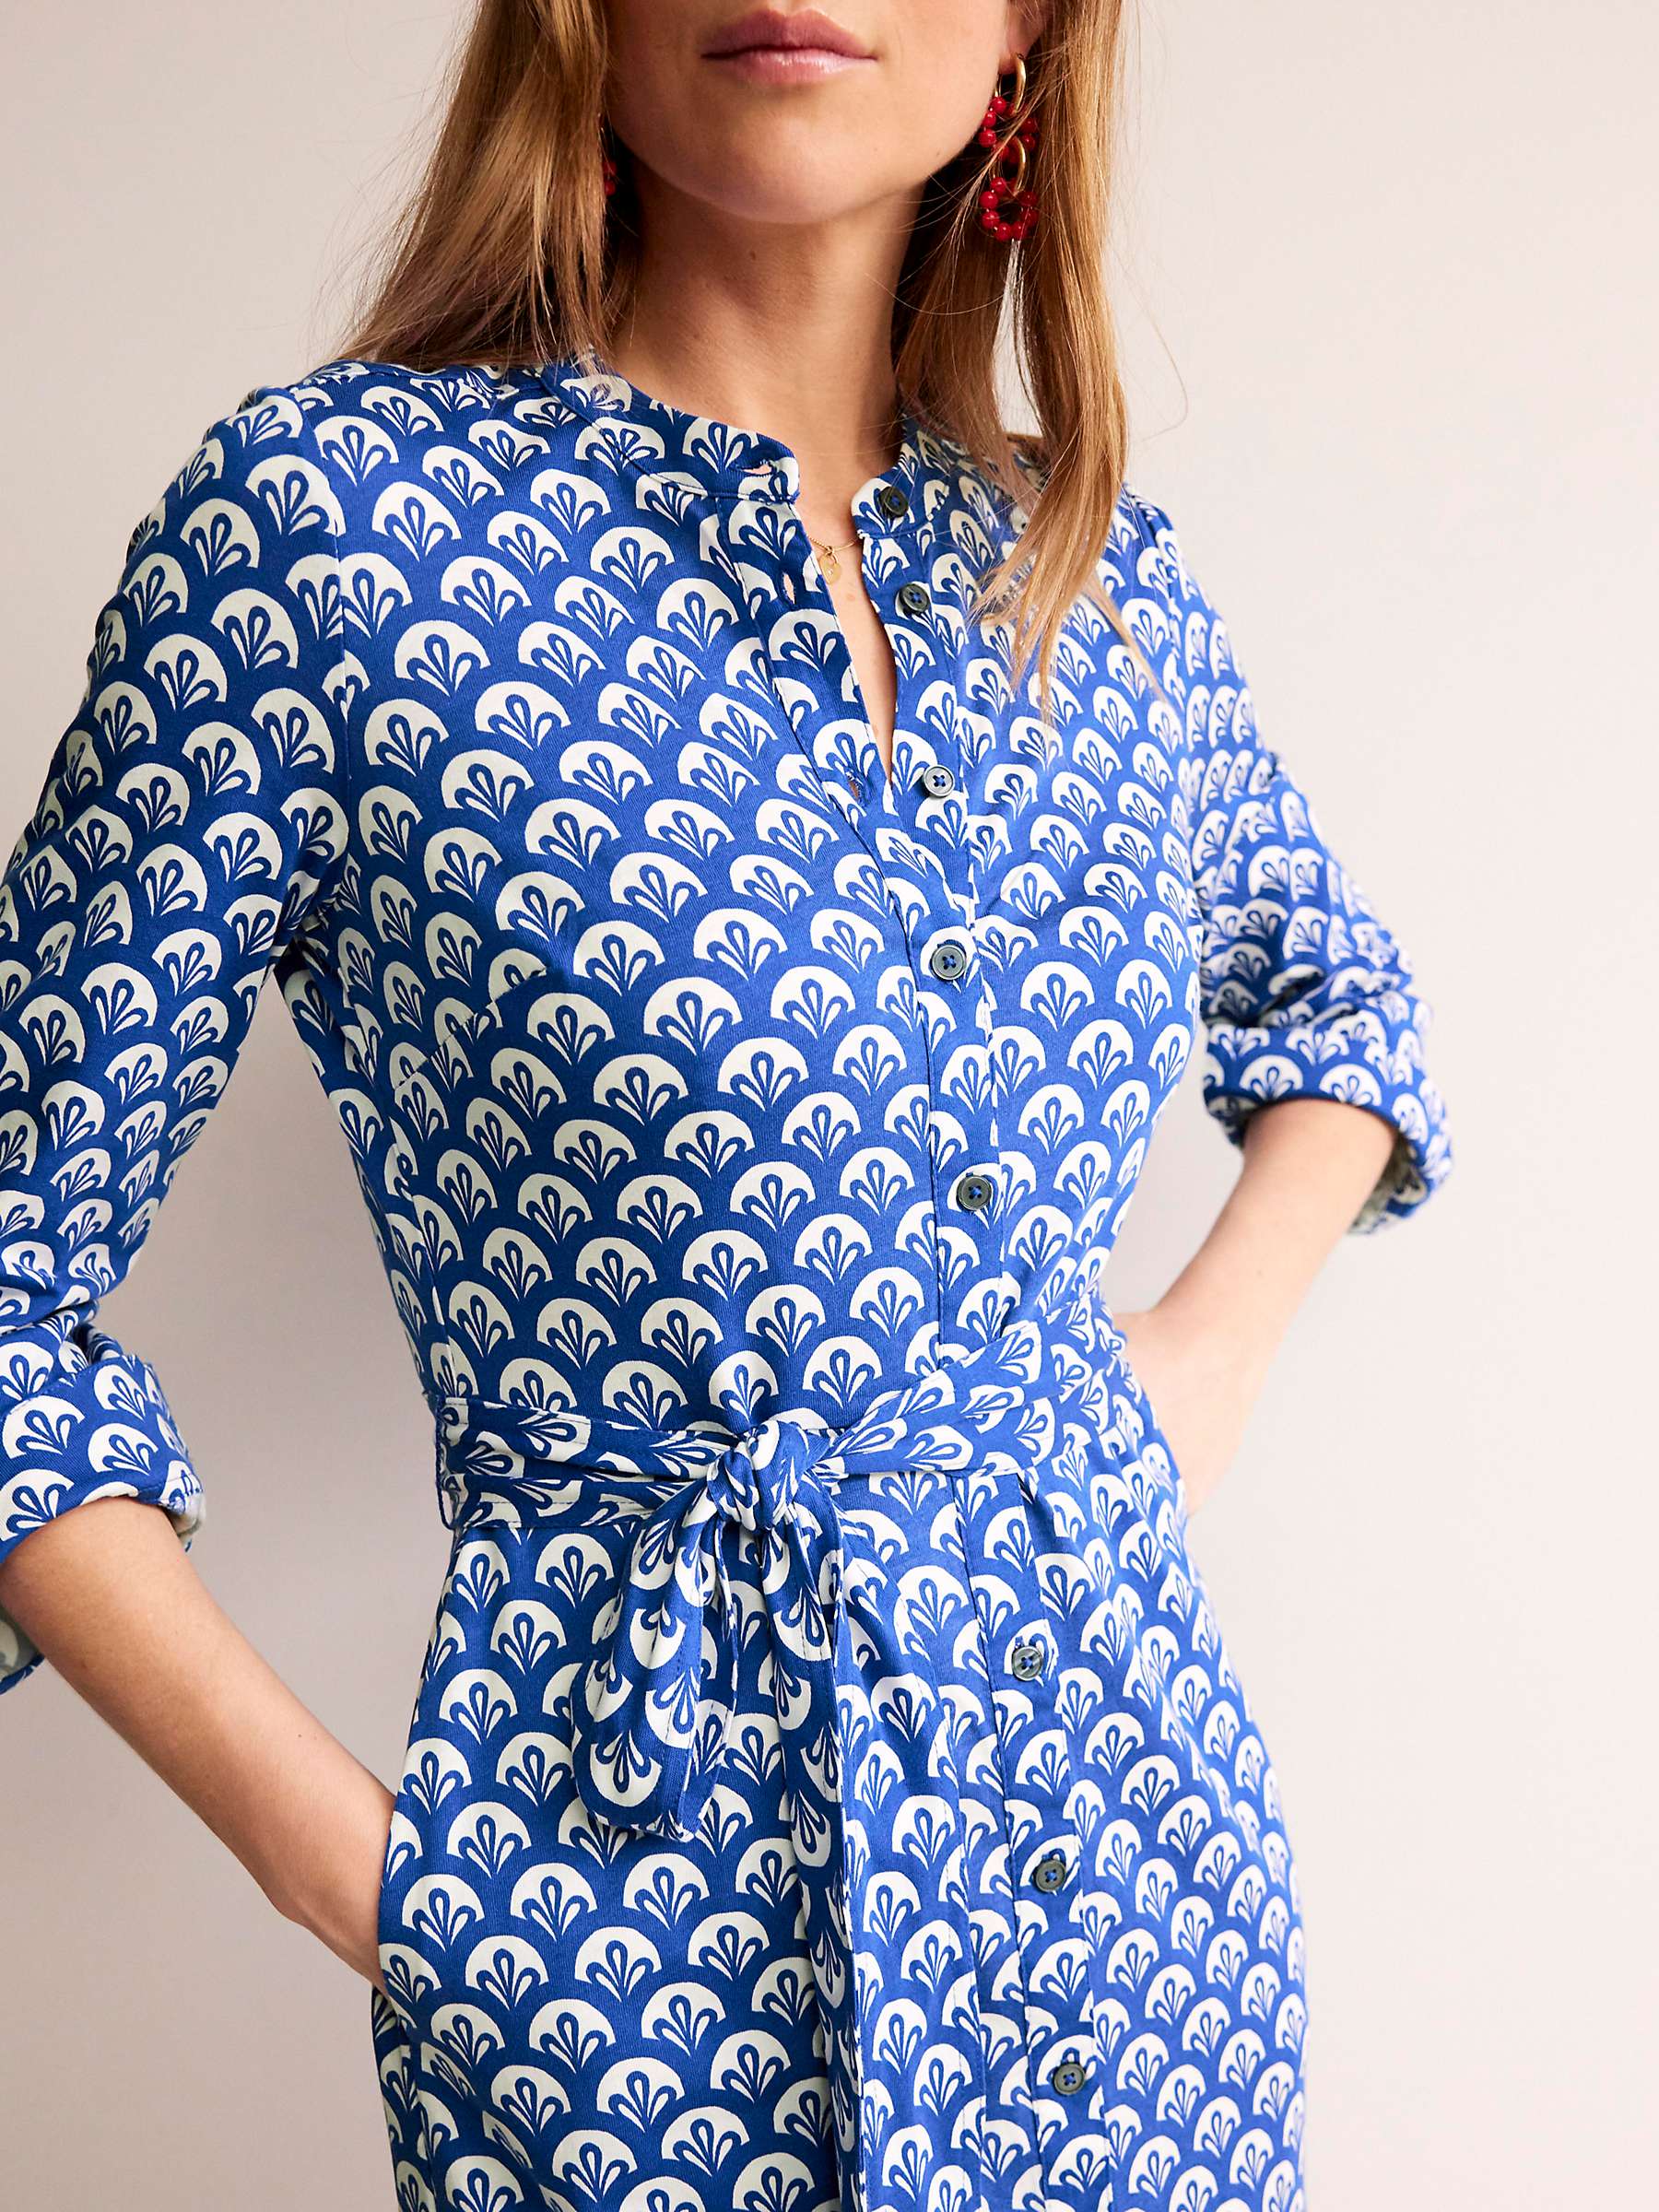 Buy Boden Julia Foliage Print Jersey Shirt Dress, Blue/White Online at johnlewis.com